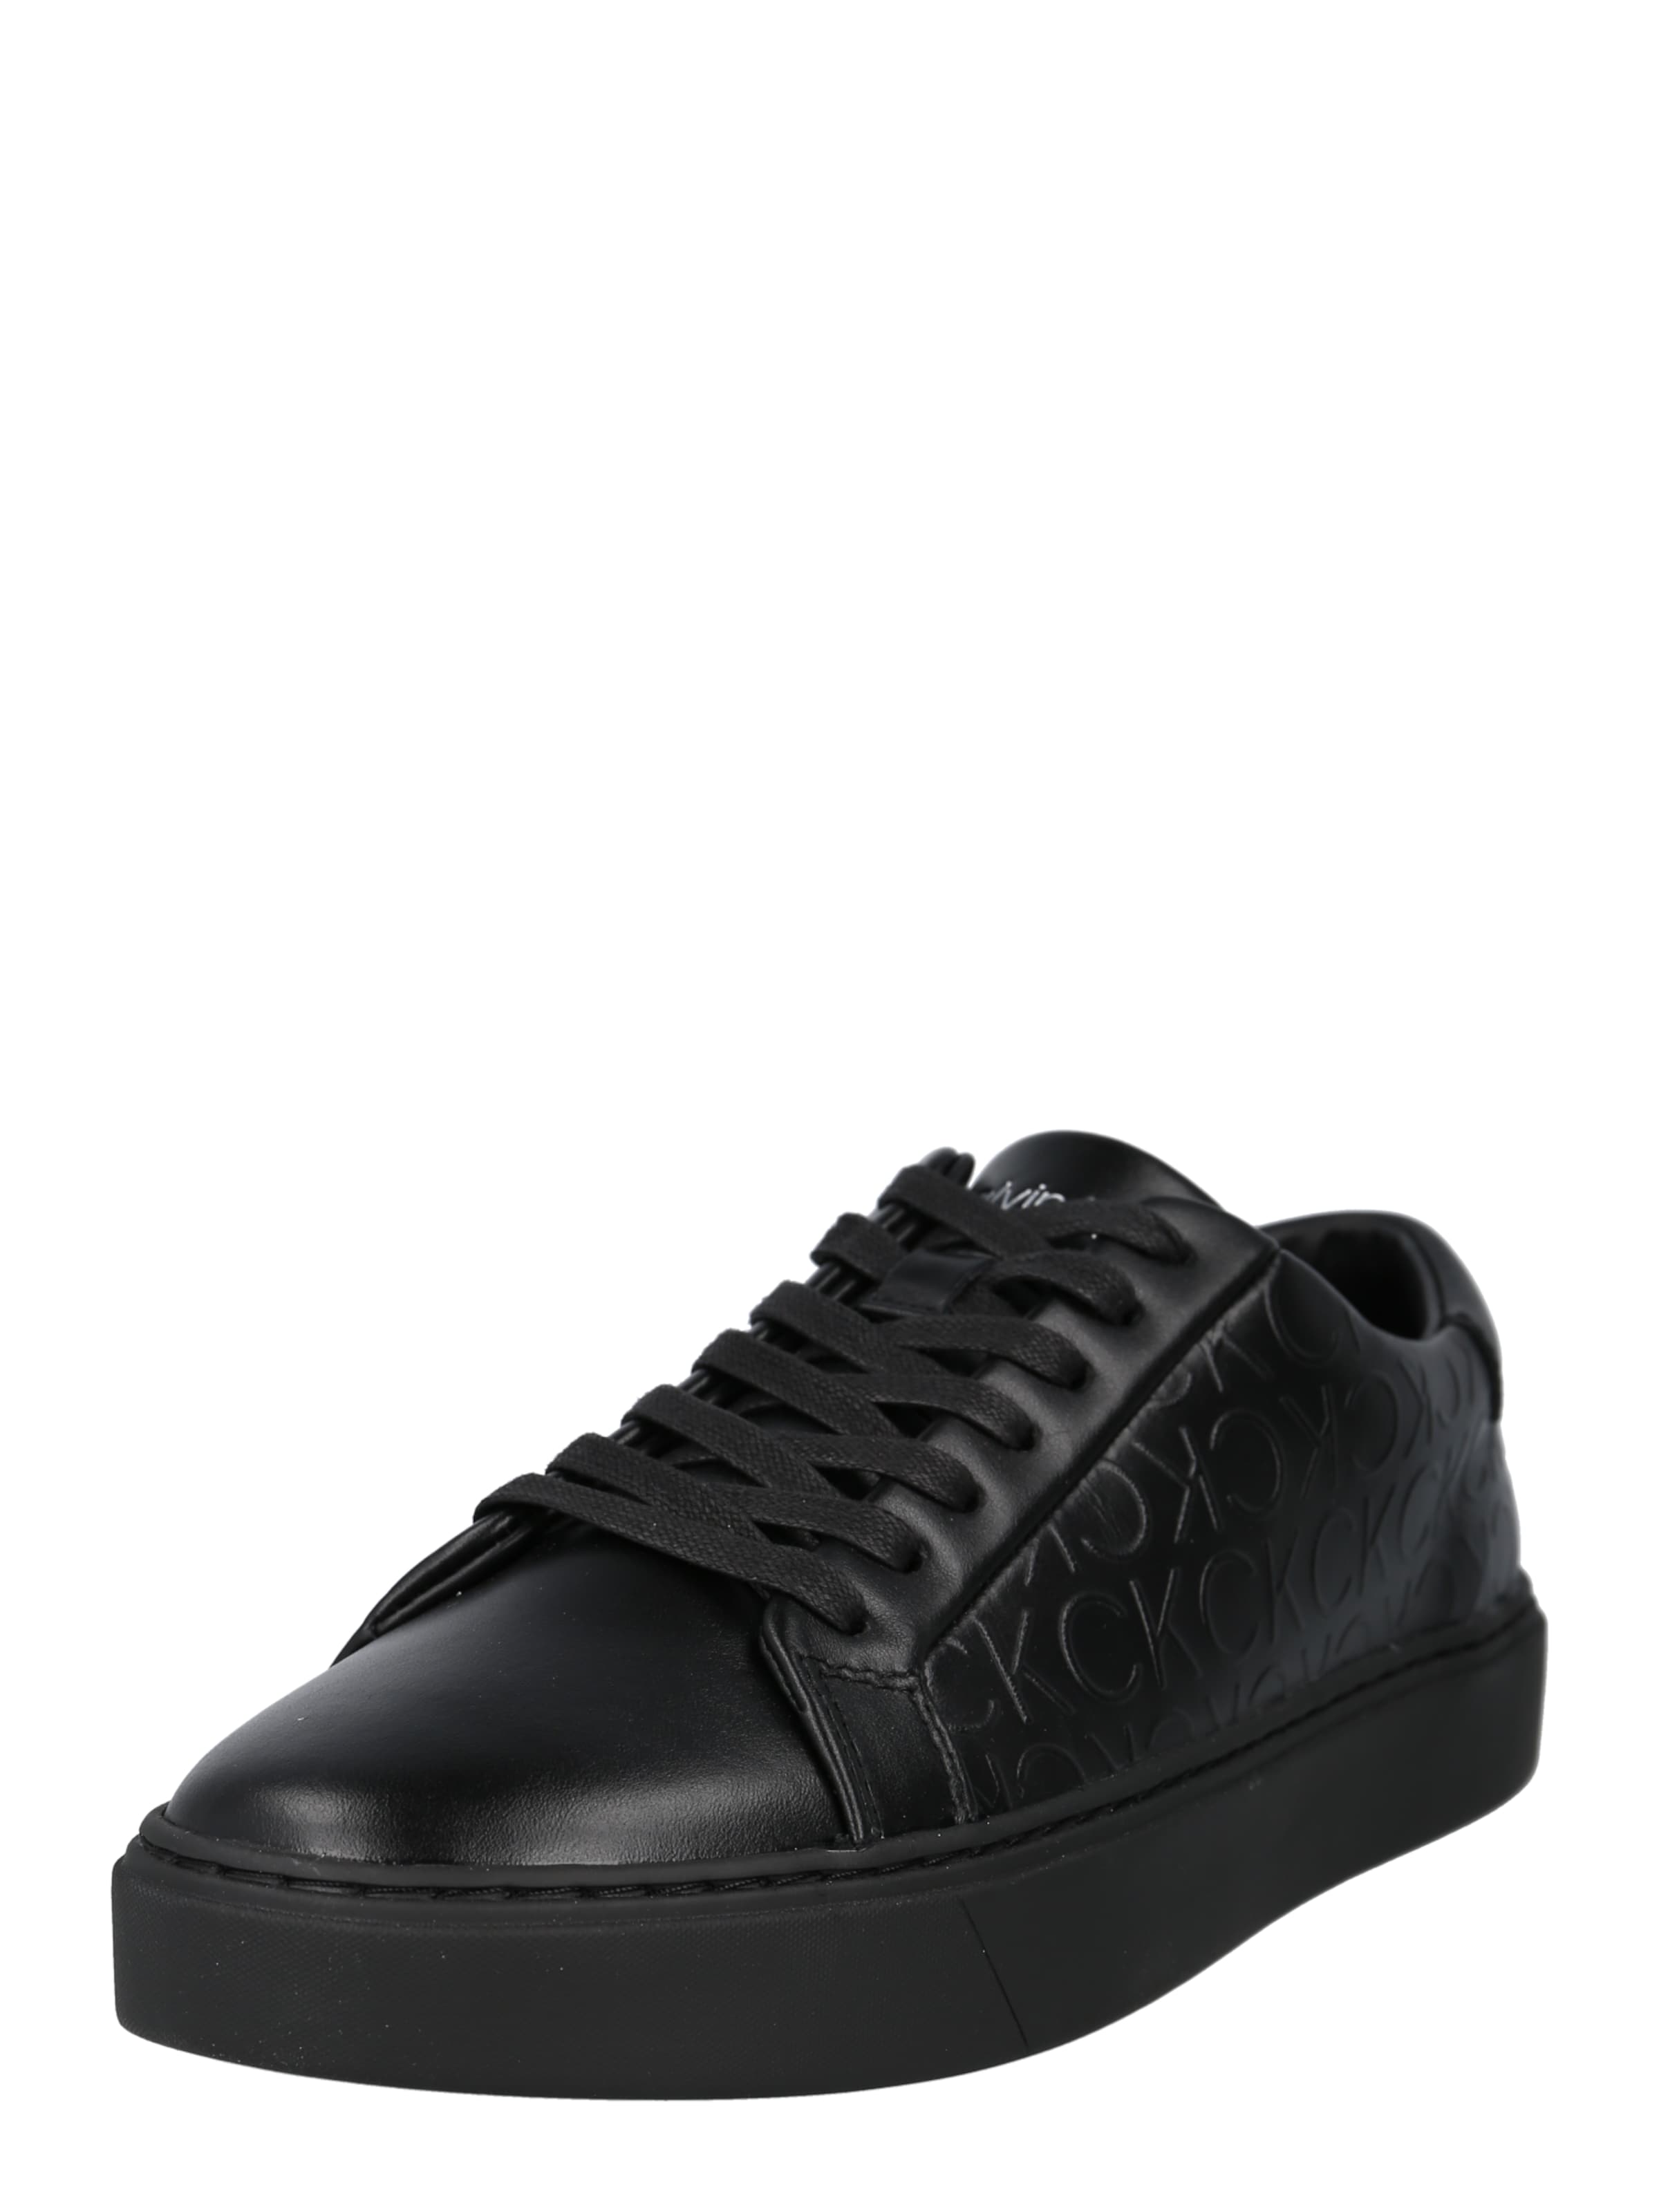 Men Sneakers | Calvin Klein Sneakers in Black - SU11877